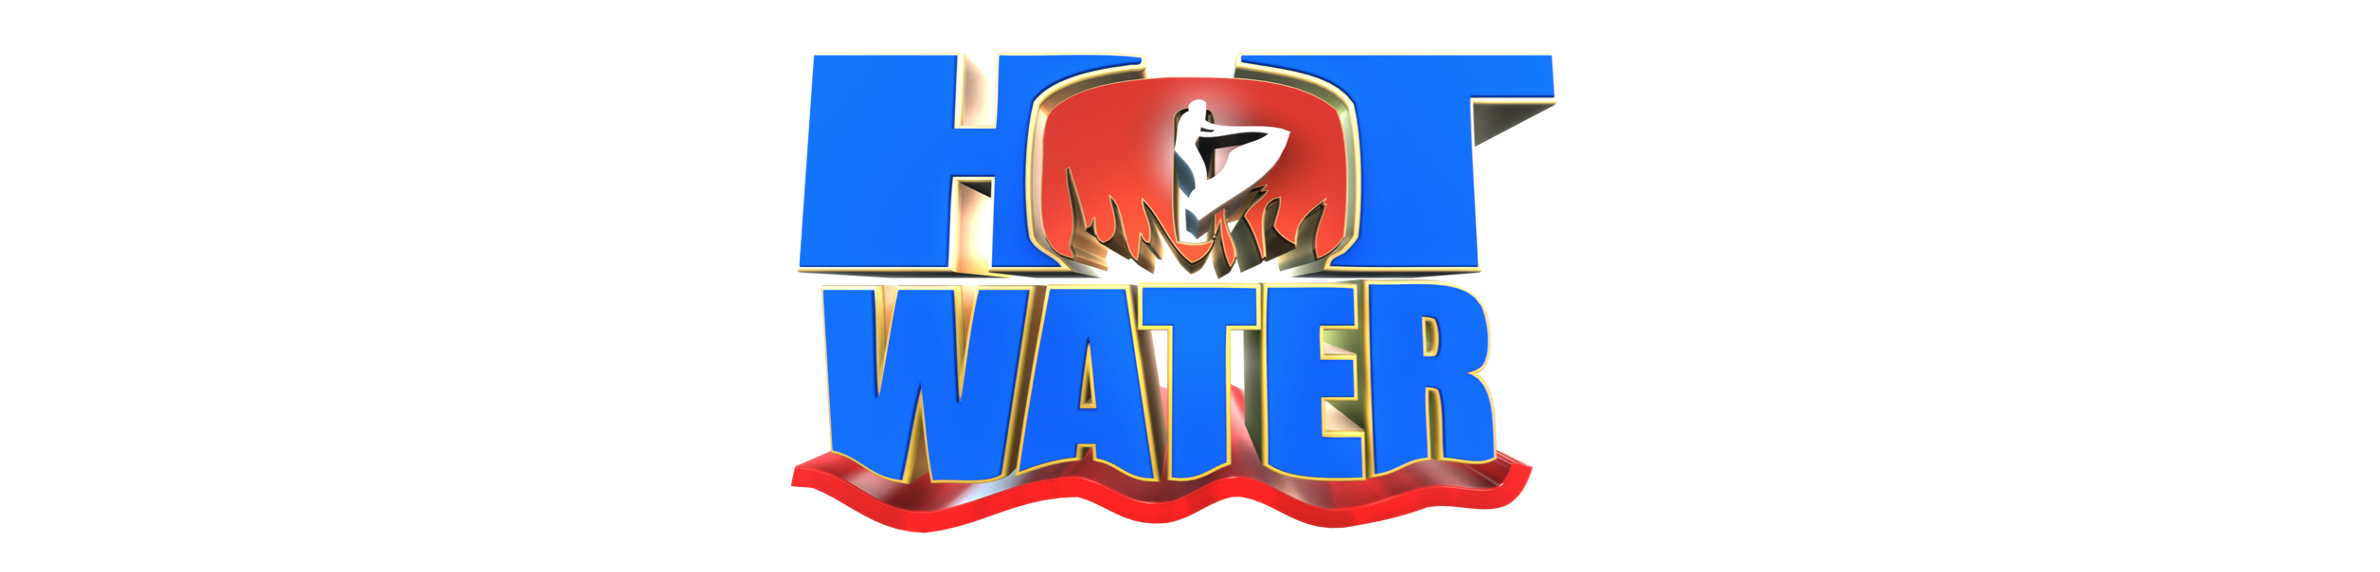 Hot Water logo for website banner.png